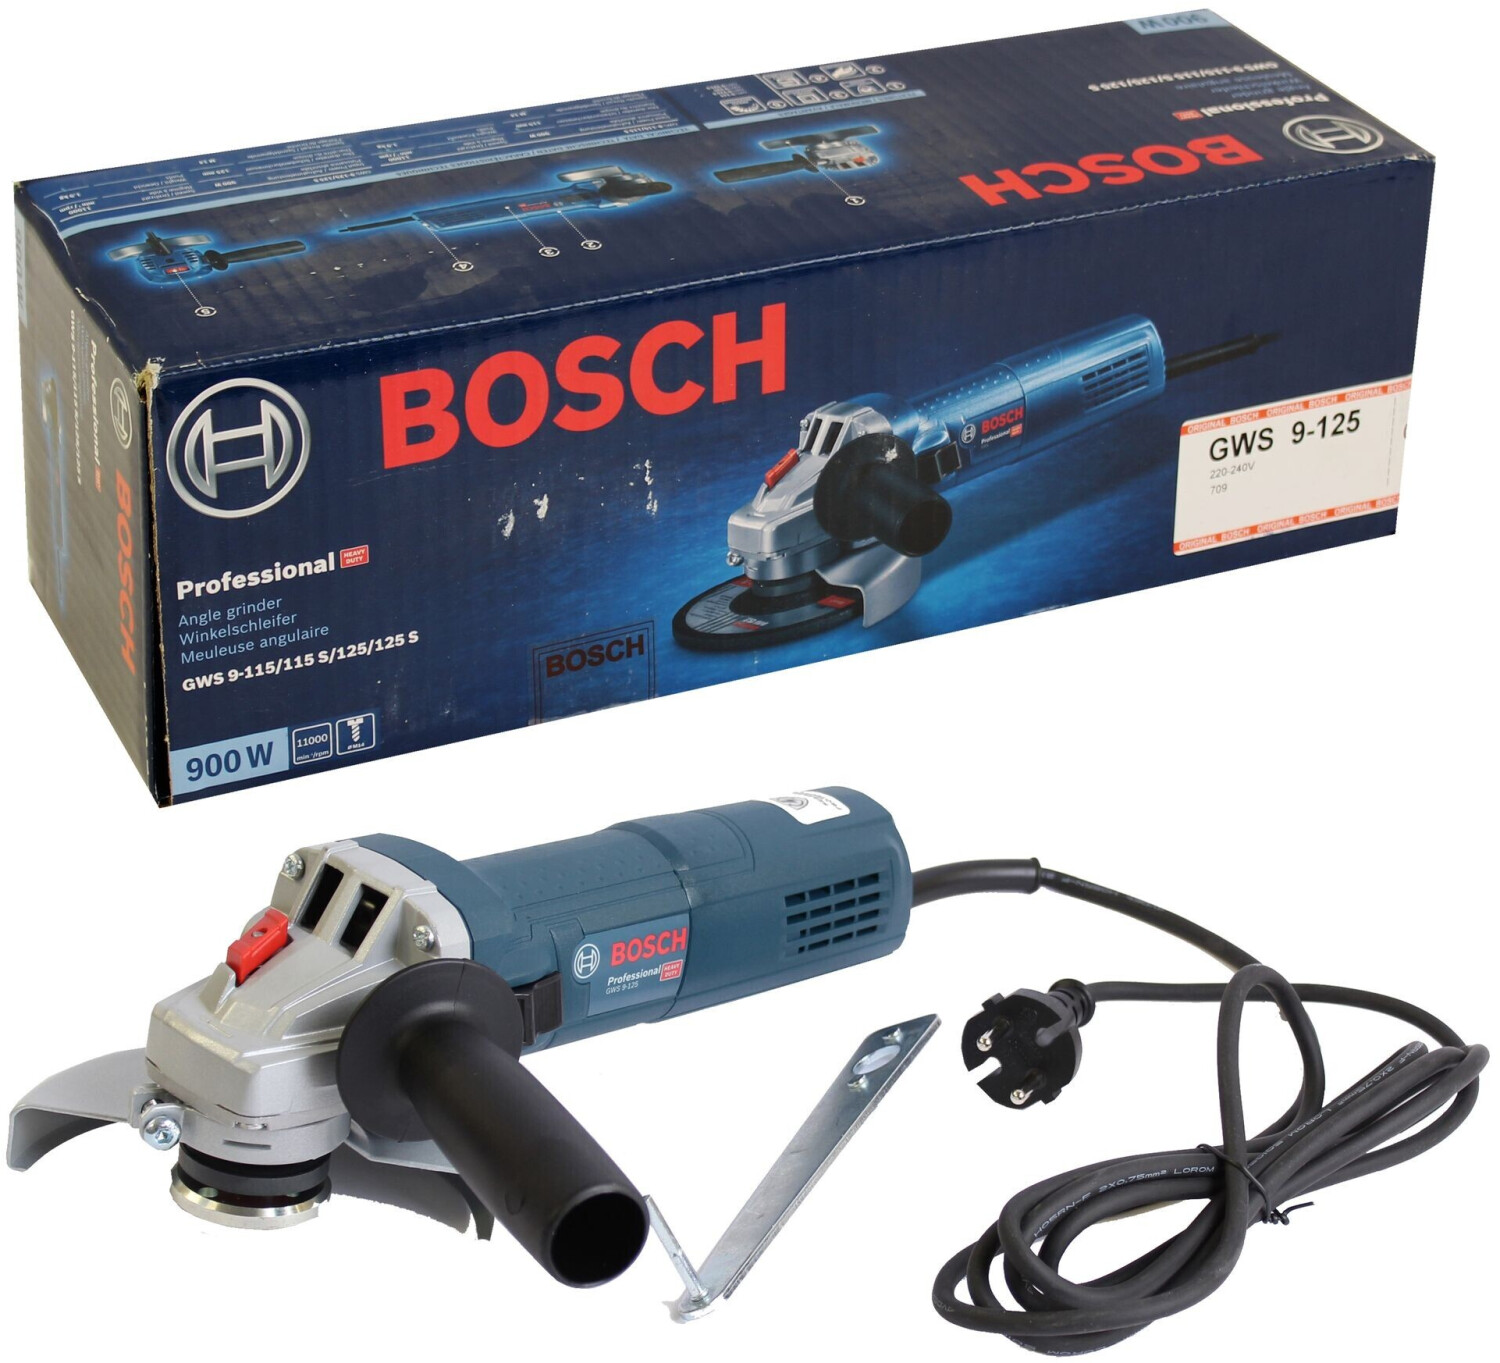 | 9-125 791 bei GWS 601 (0 000) Bosch 119,99 Professional € ab Preisvergleich